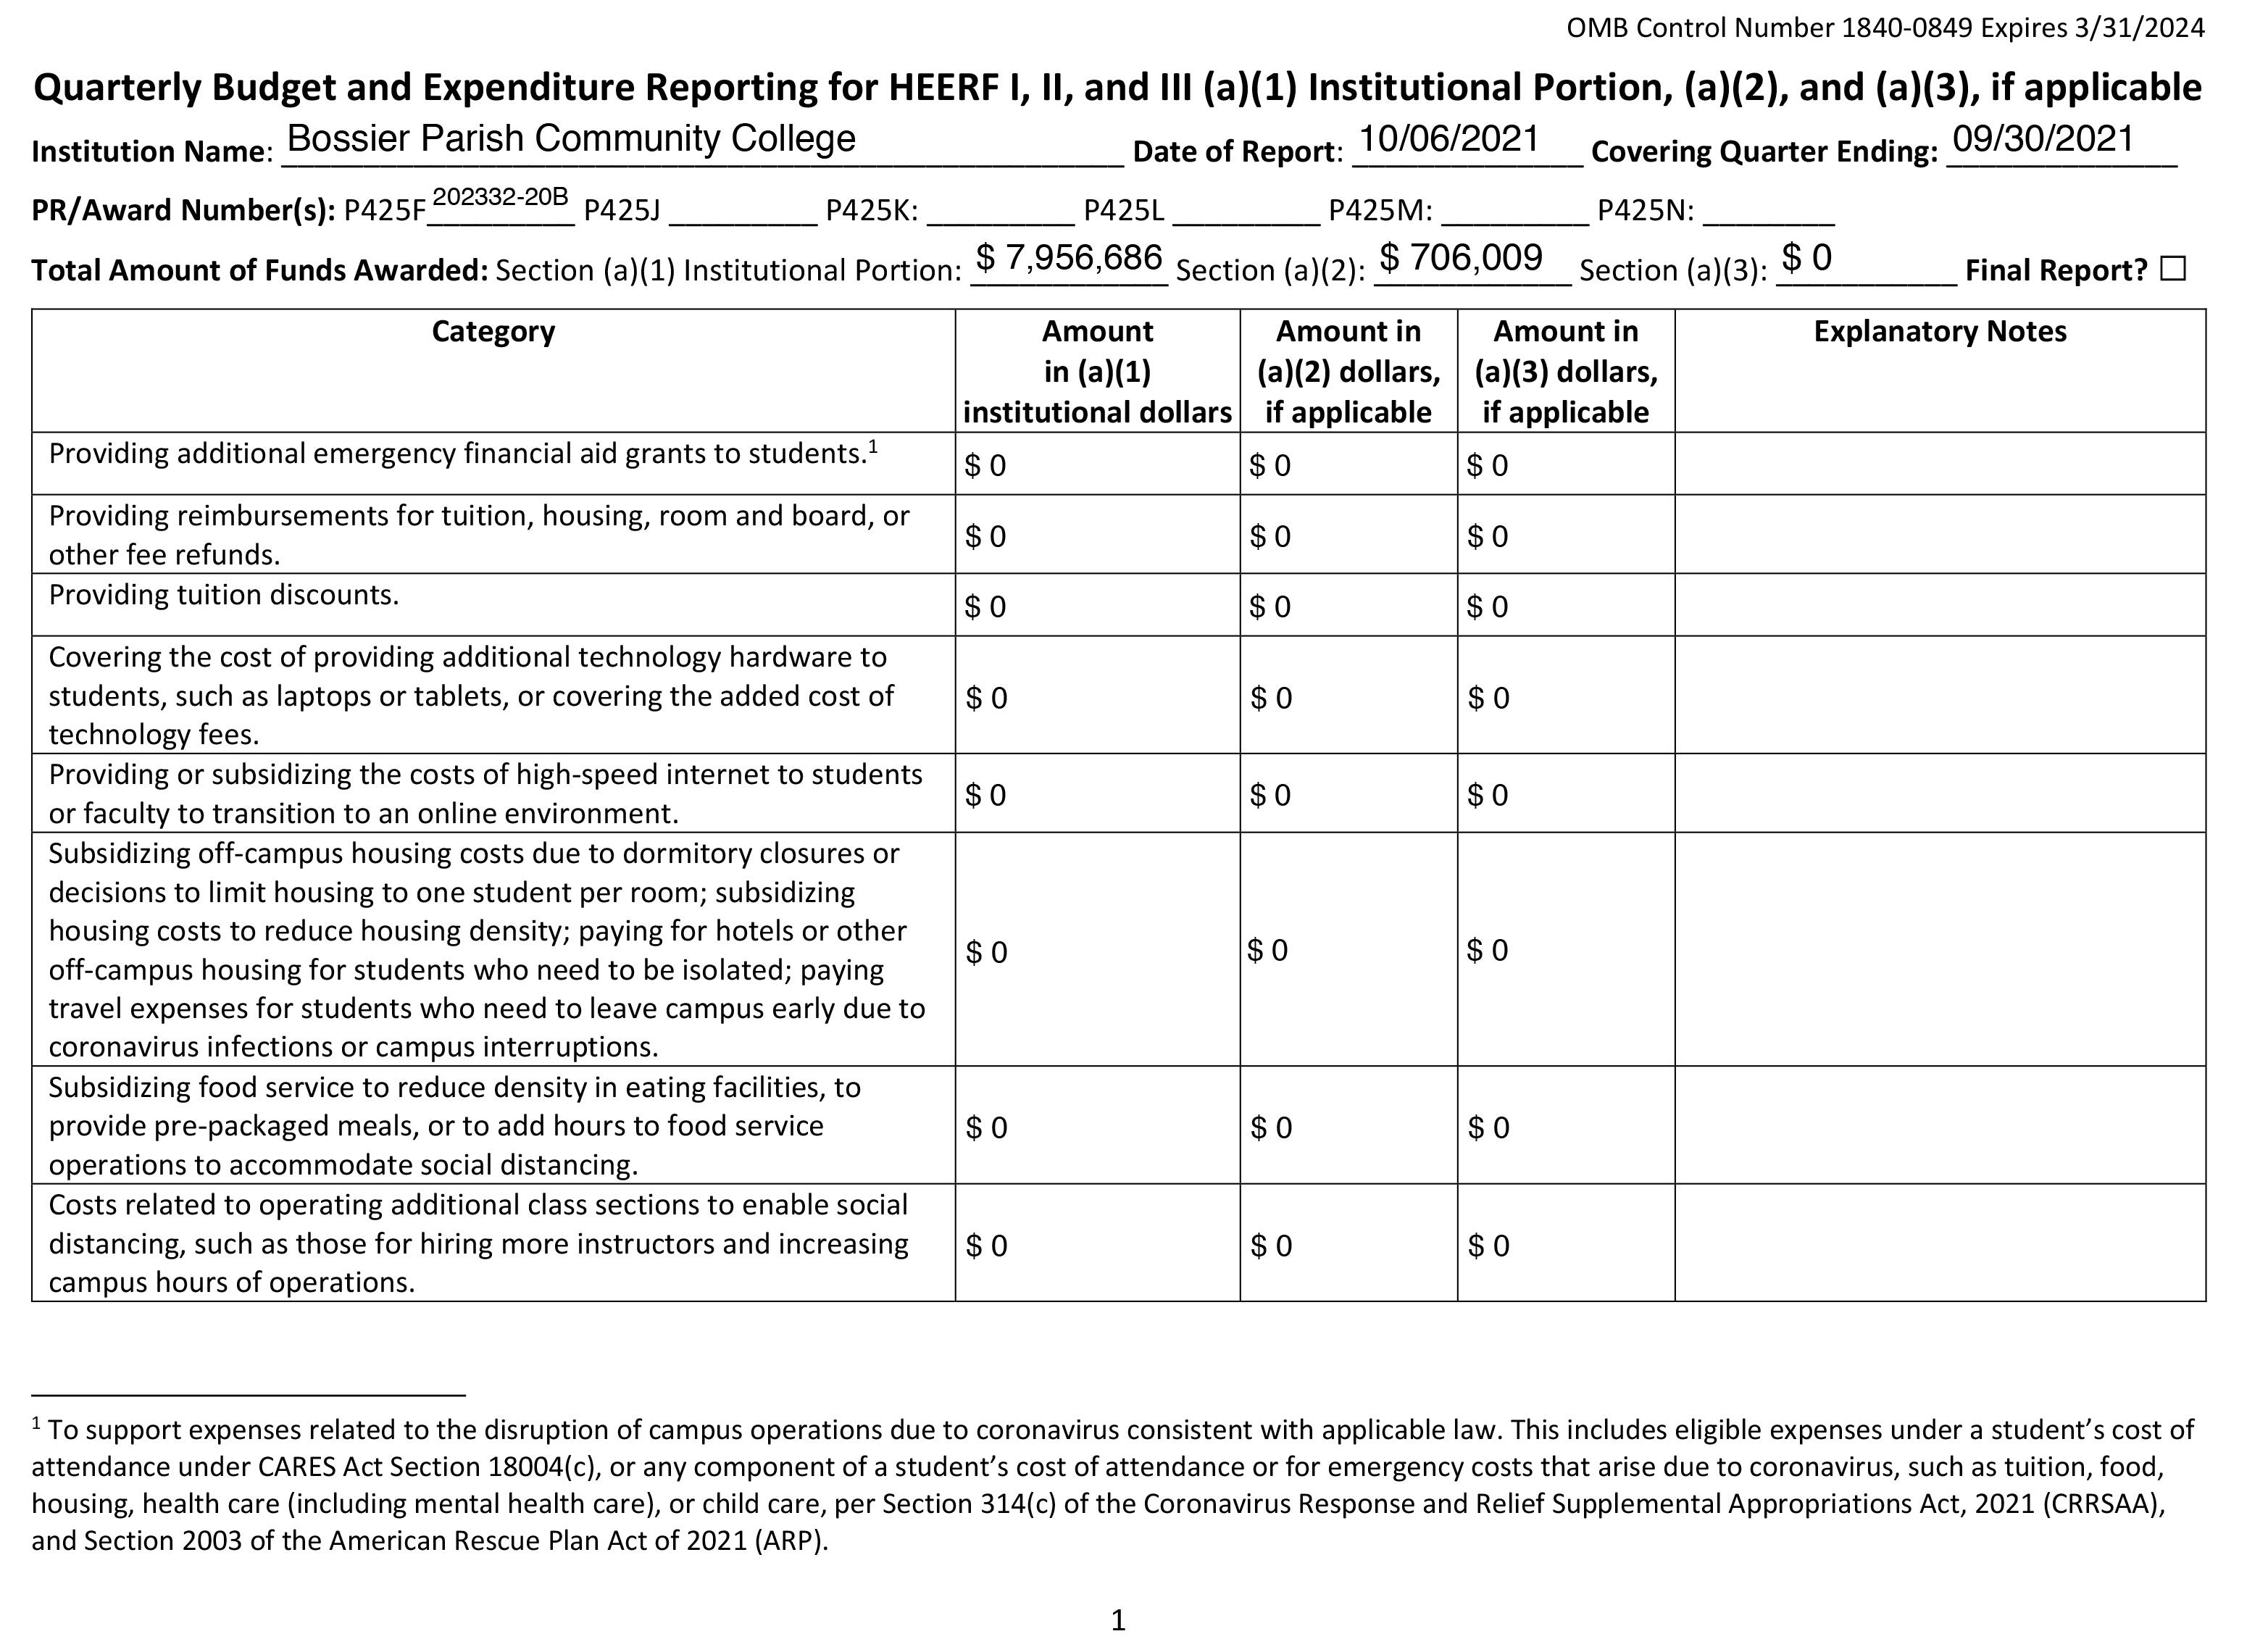 Third Quarter Expenditure Report - Page 1